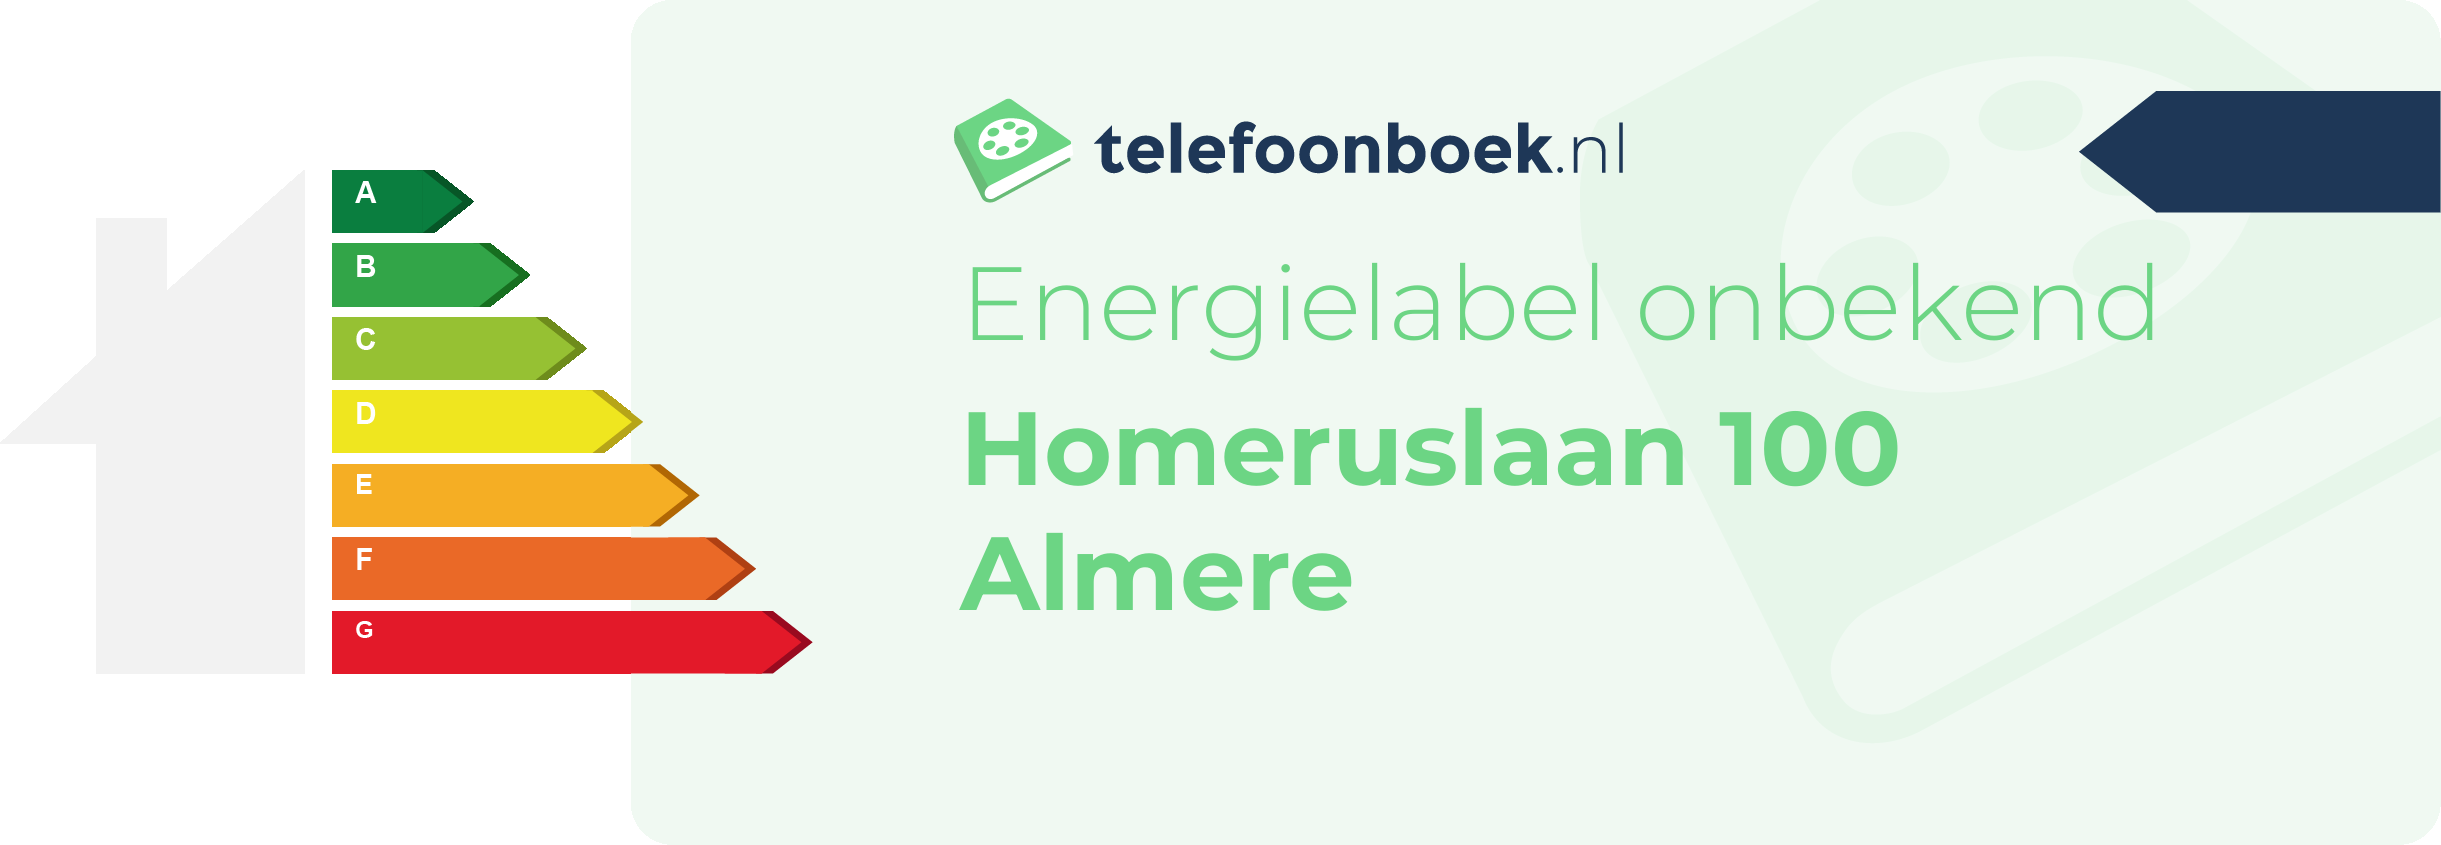 Energielabel Homeruslaan 100 Almere